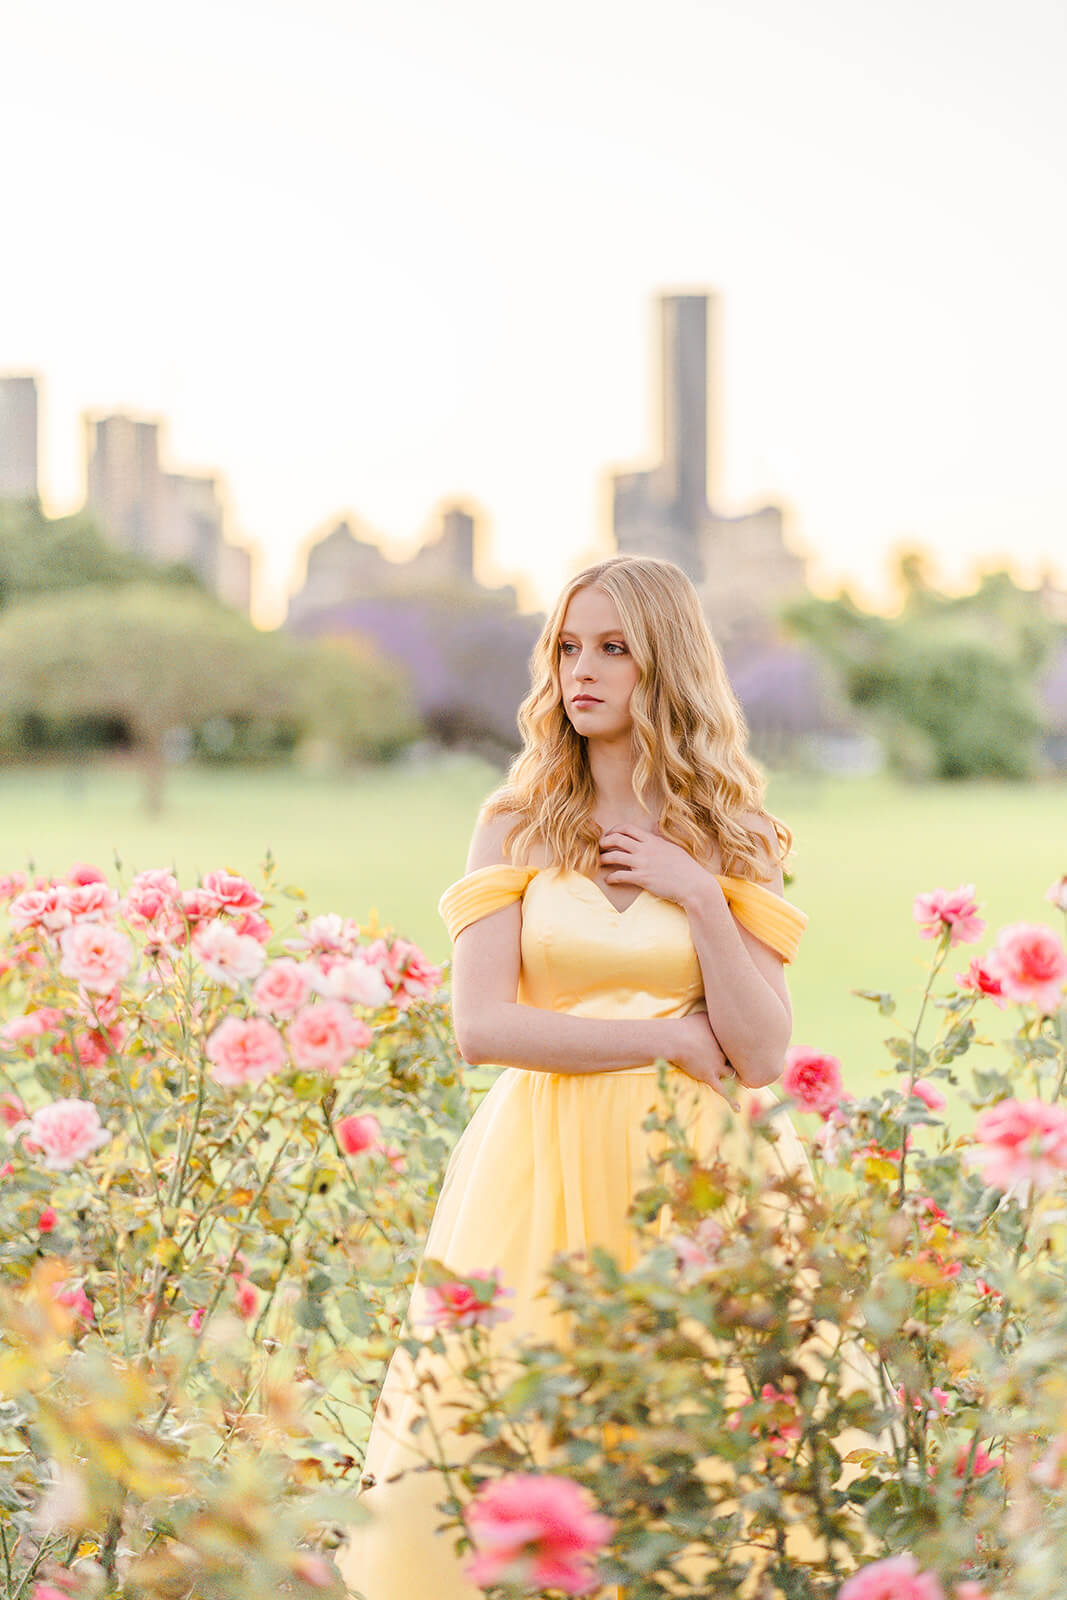 Brisbane high school girl in yellow foraml dress in New Farm Rose garden pre-formal photoshoot.